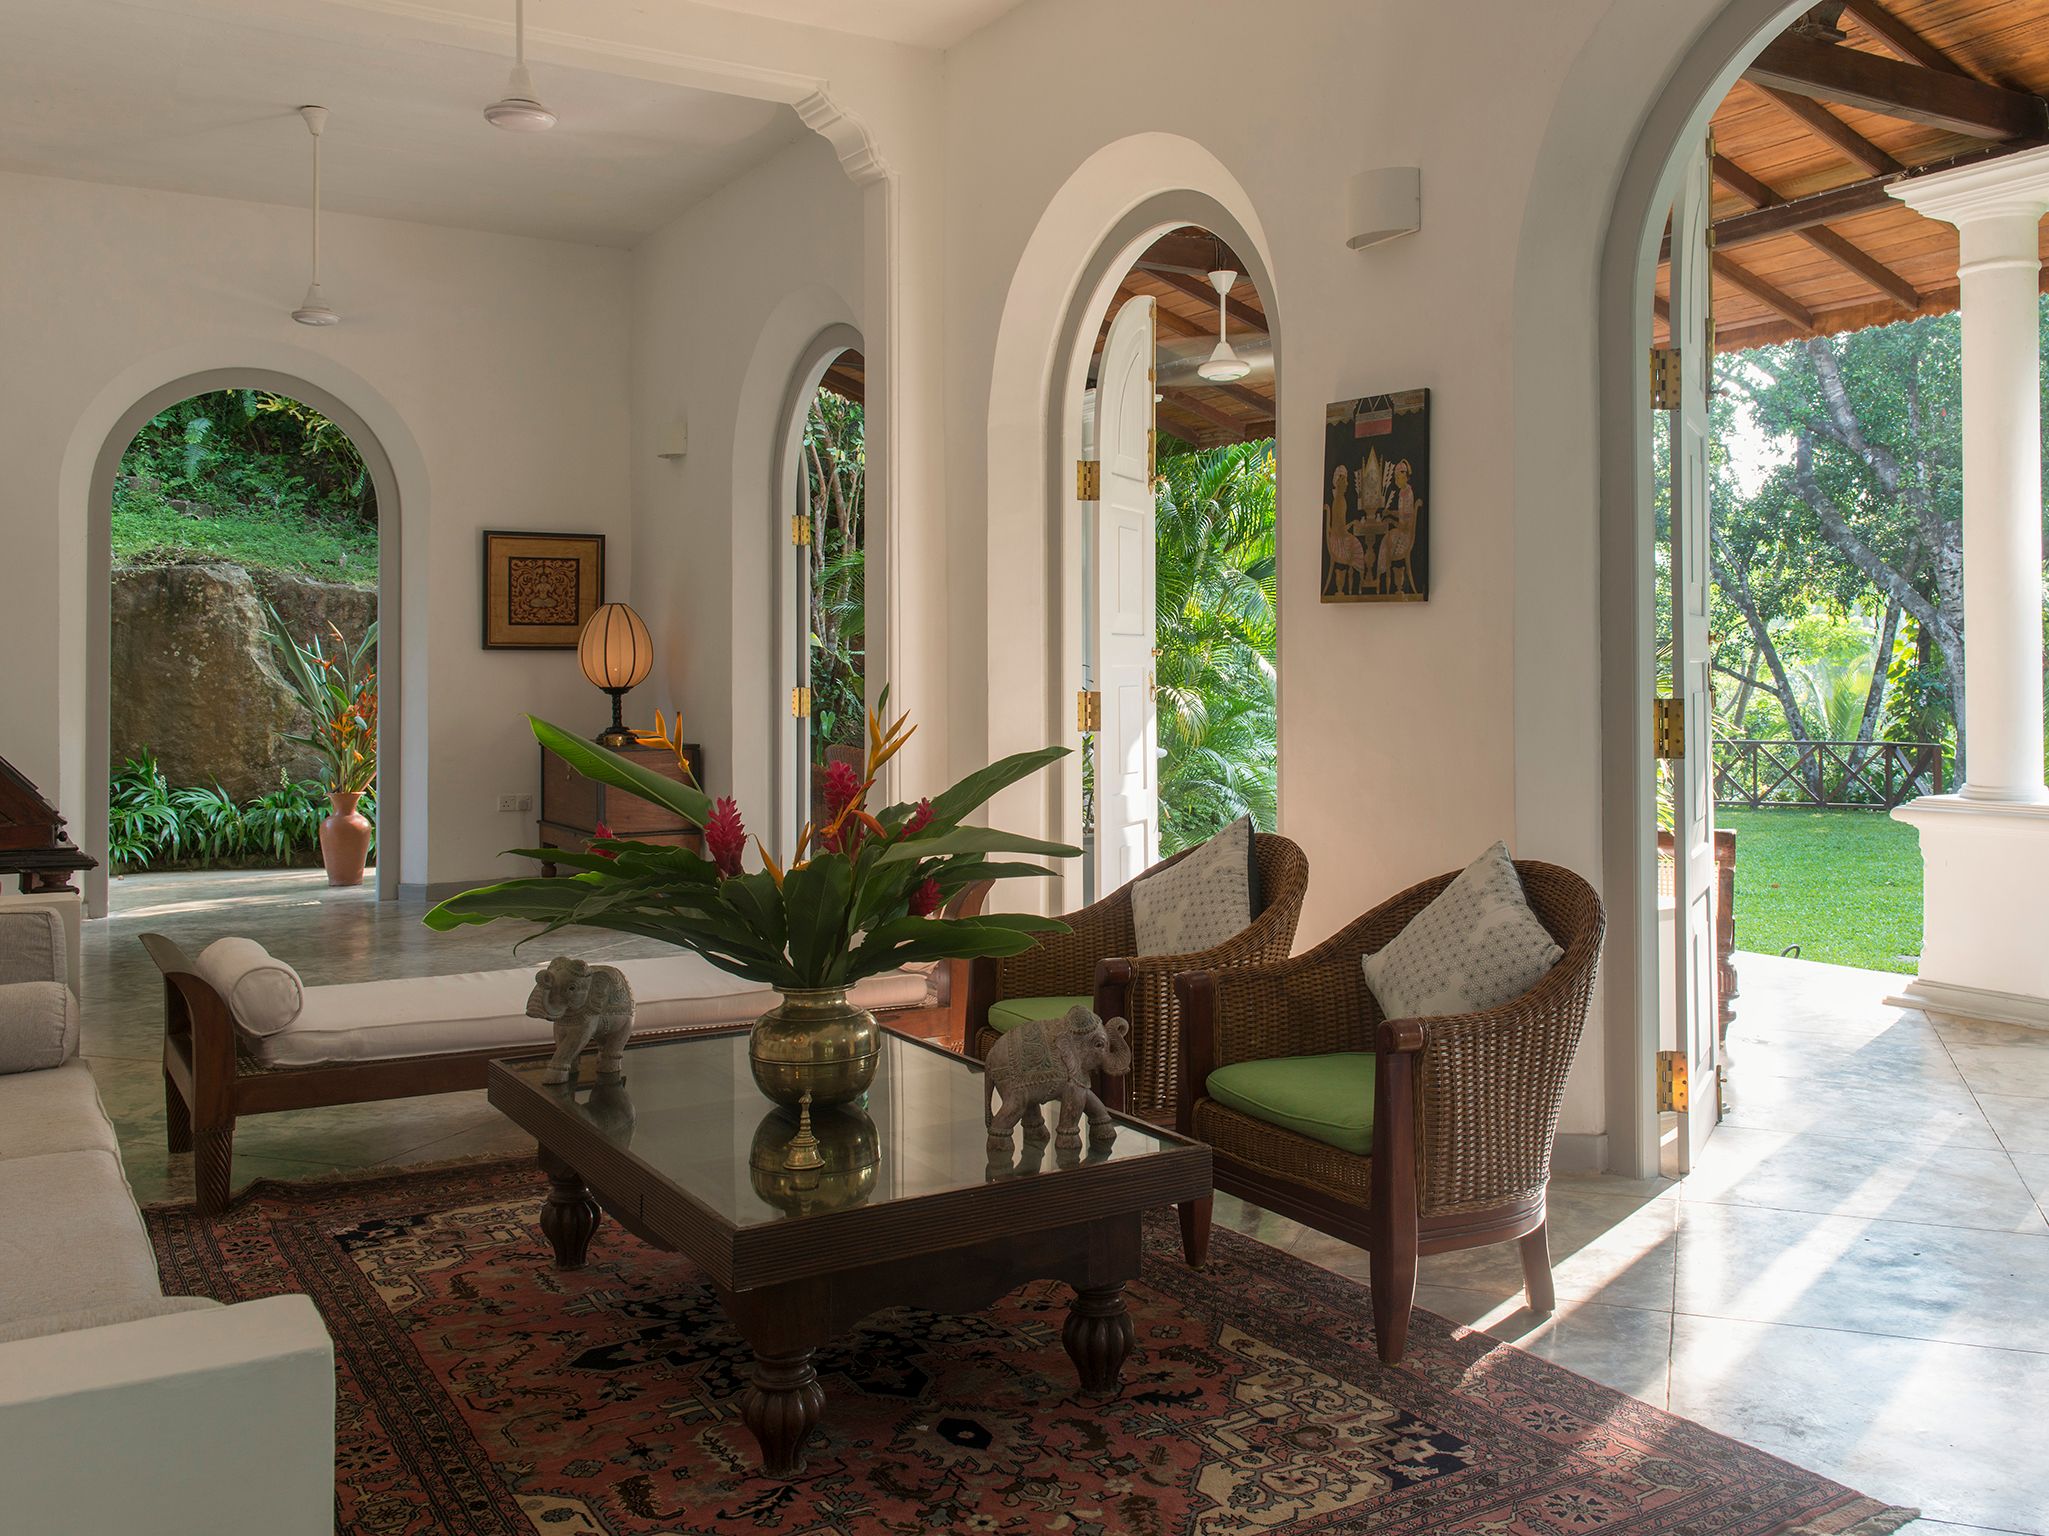 Pooja Kanda - Living room and veranda